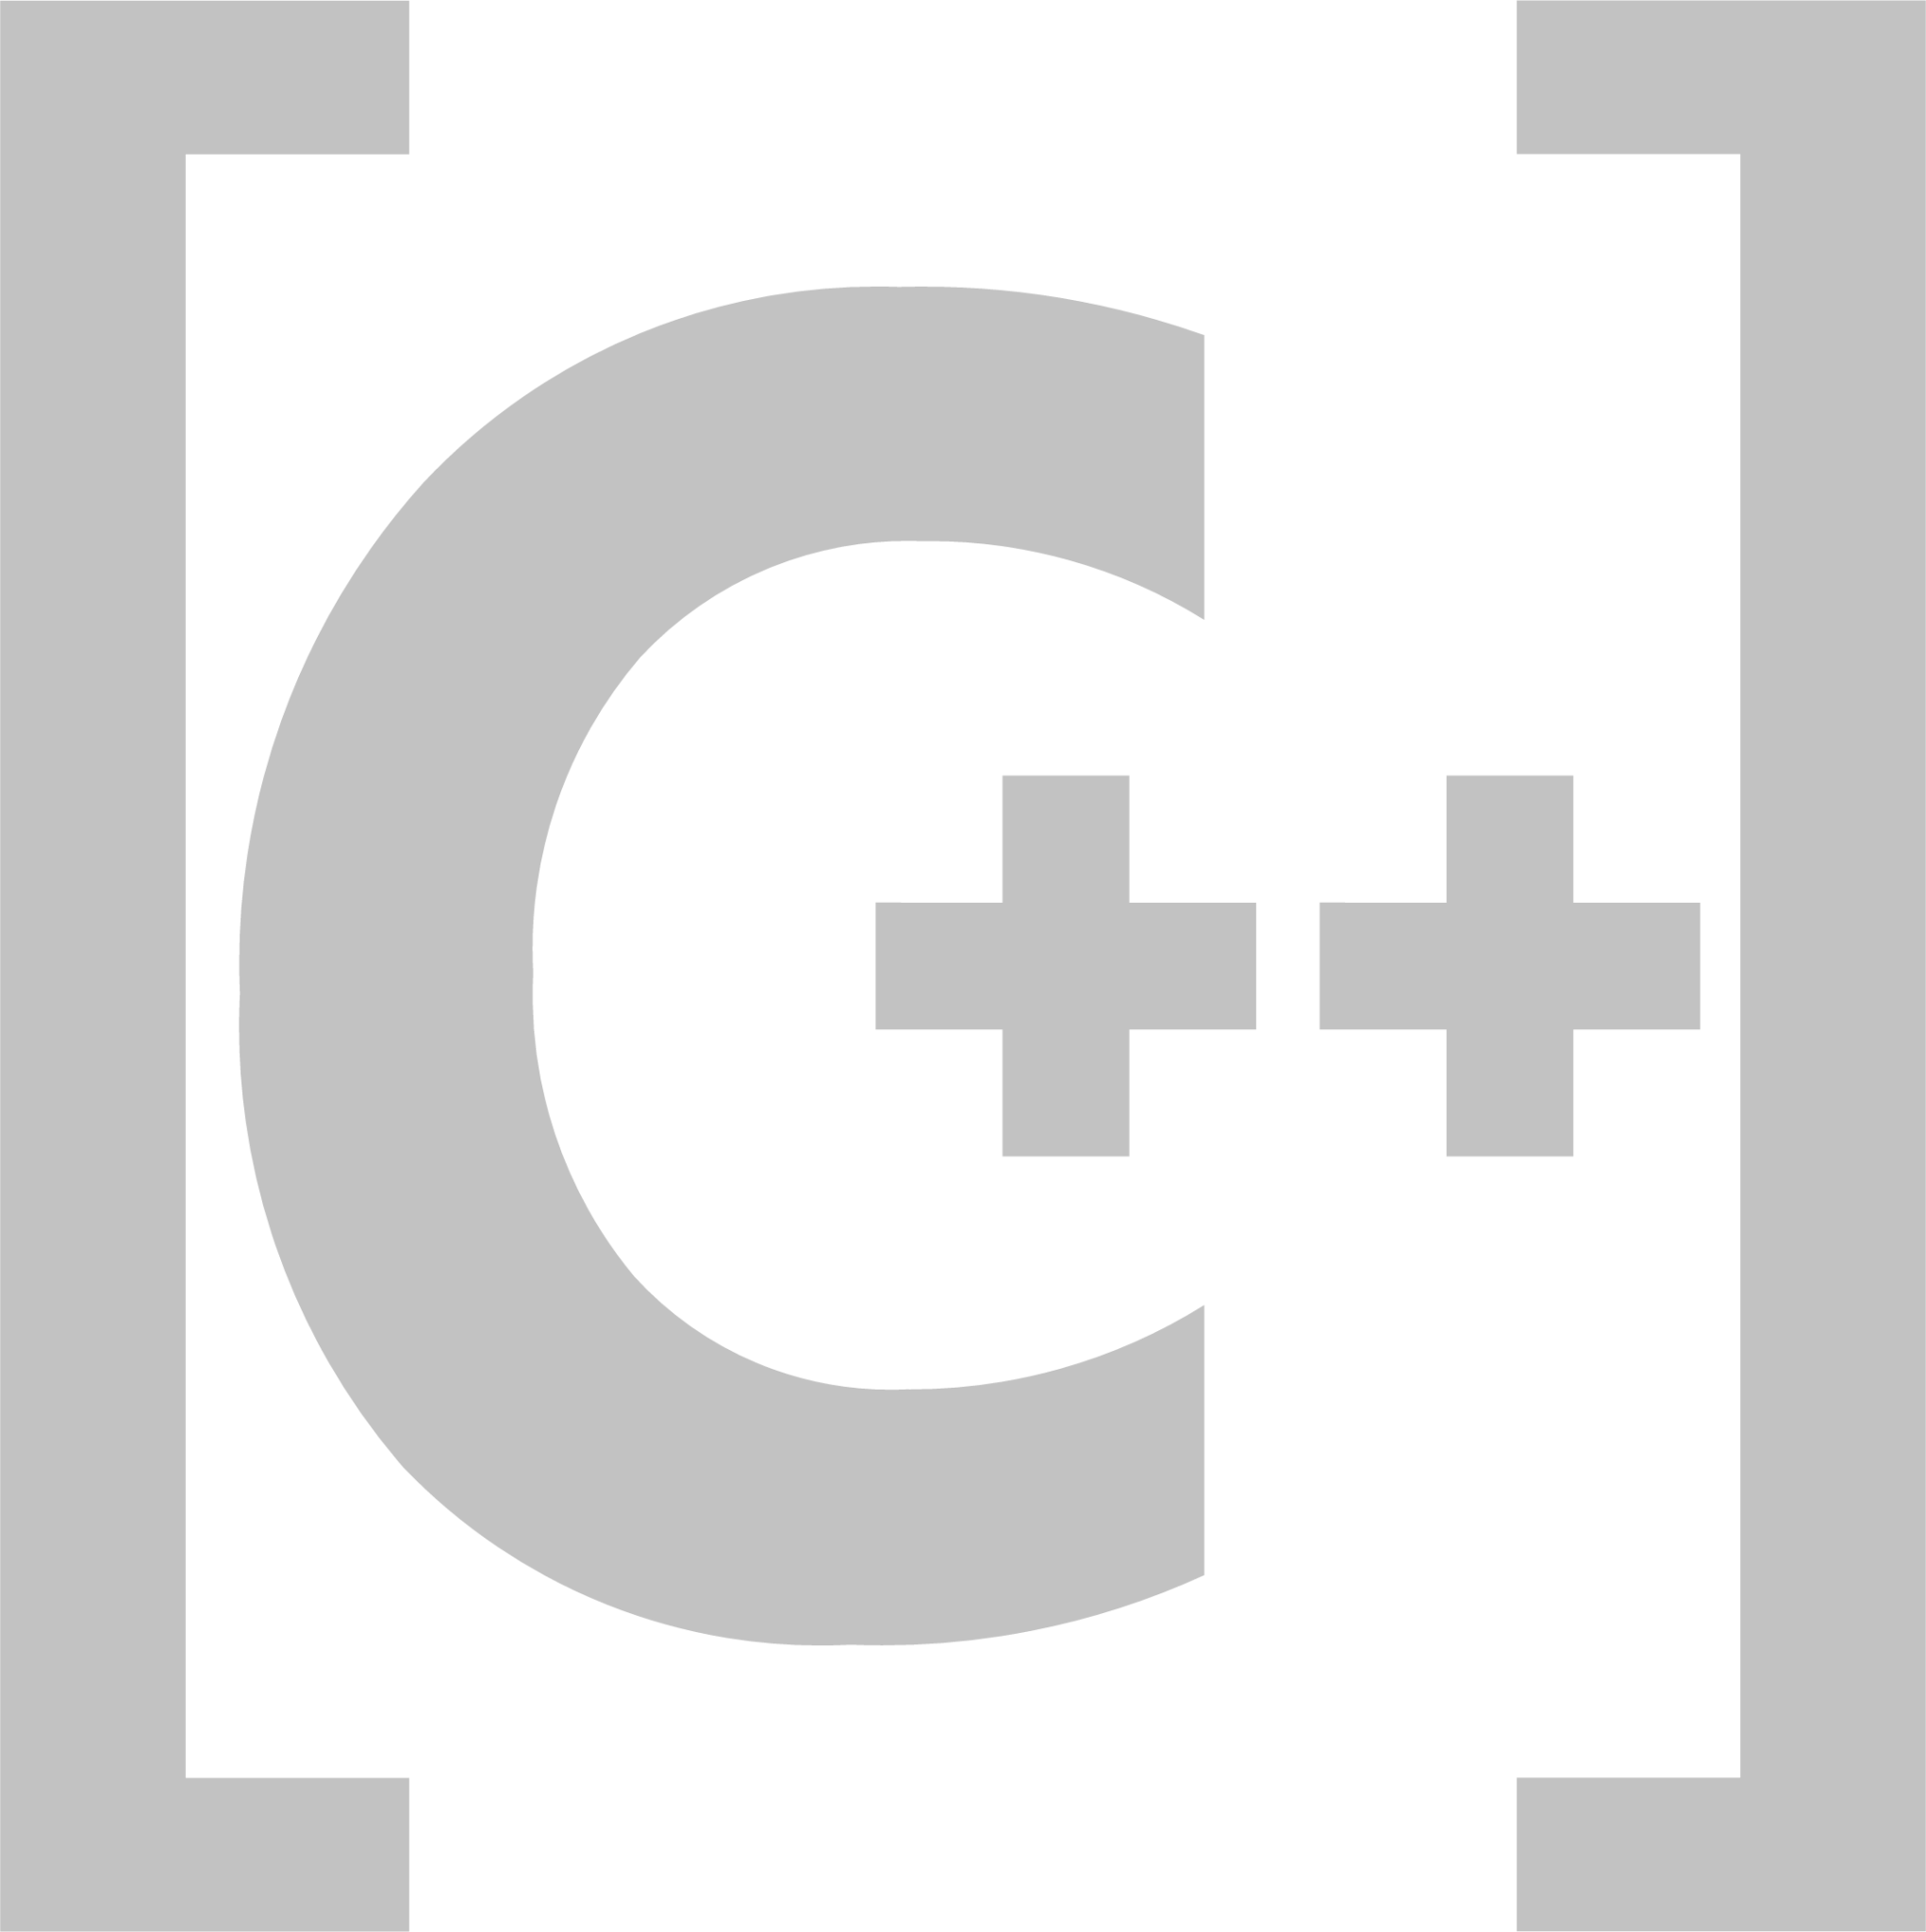 file type objectivecpp icon